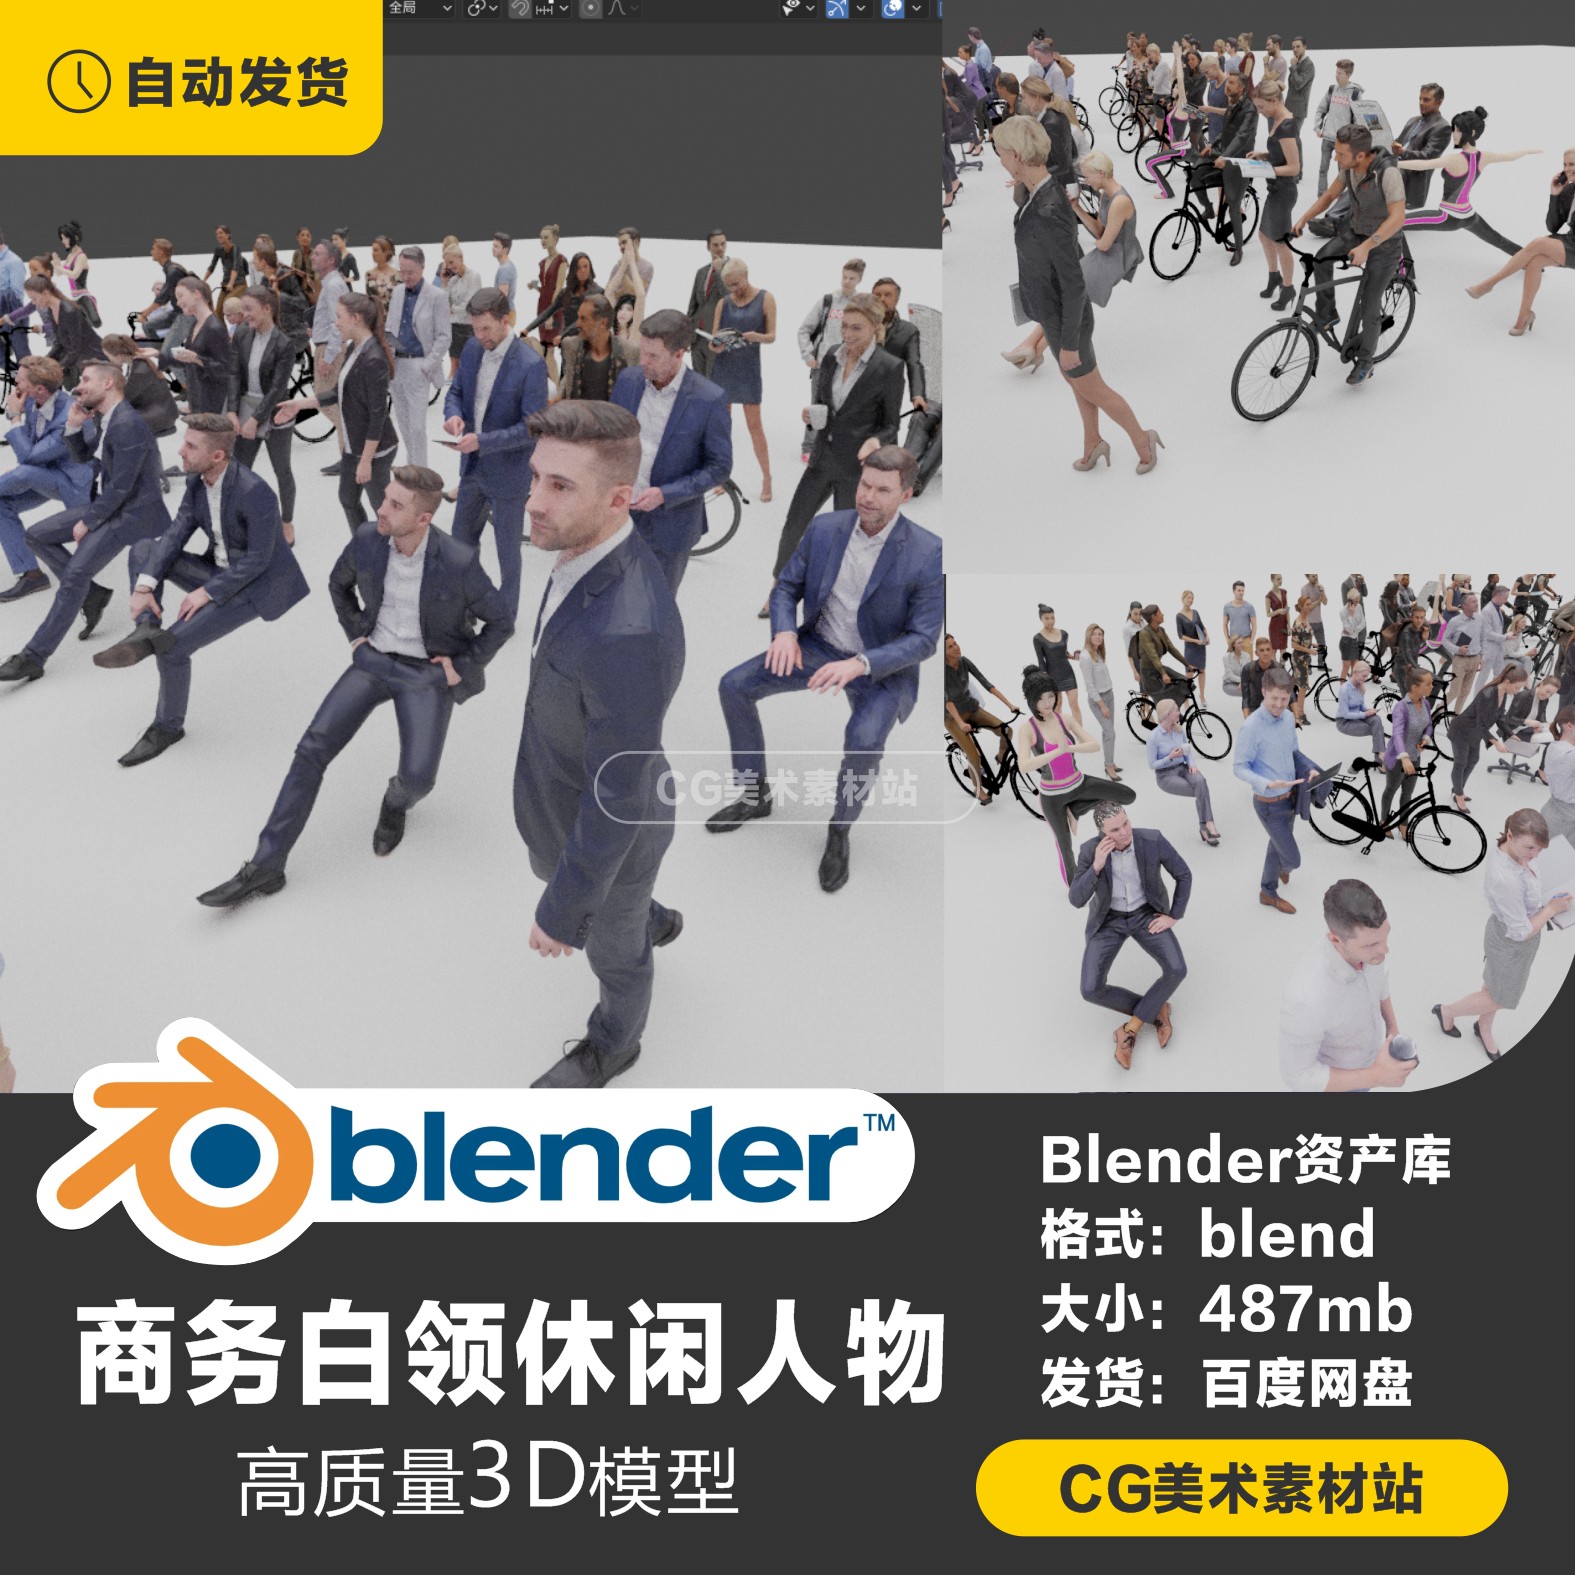 Blender 路人商务人群休闲运动儿童人物3D模型素材资产库